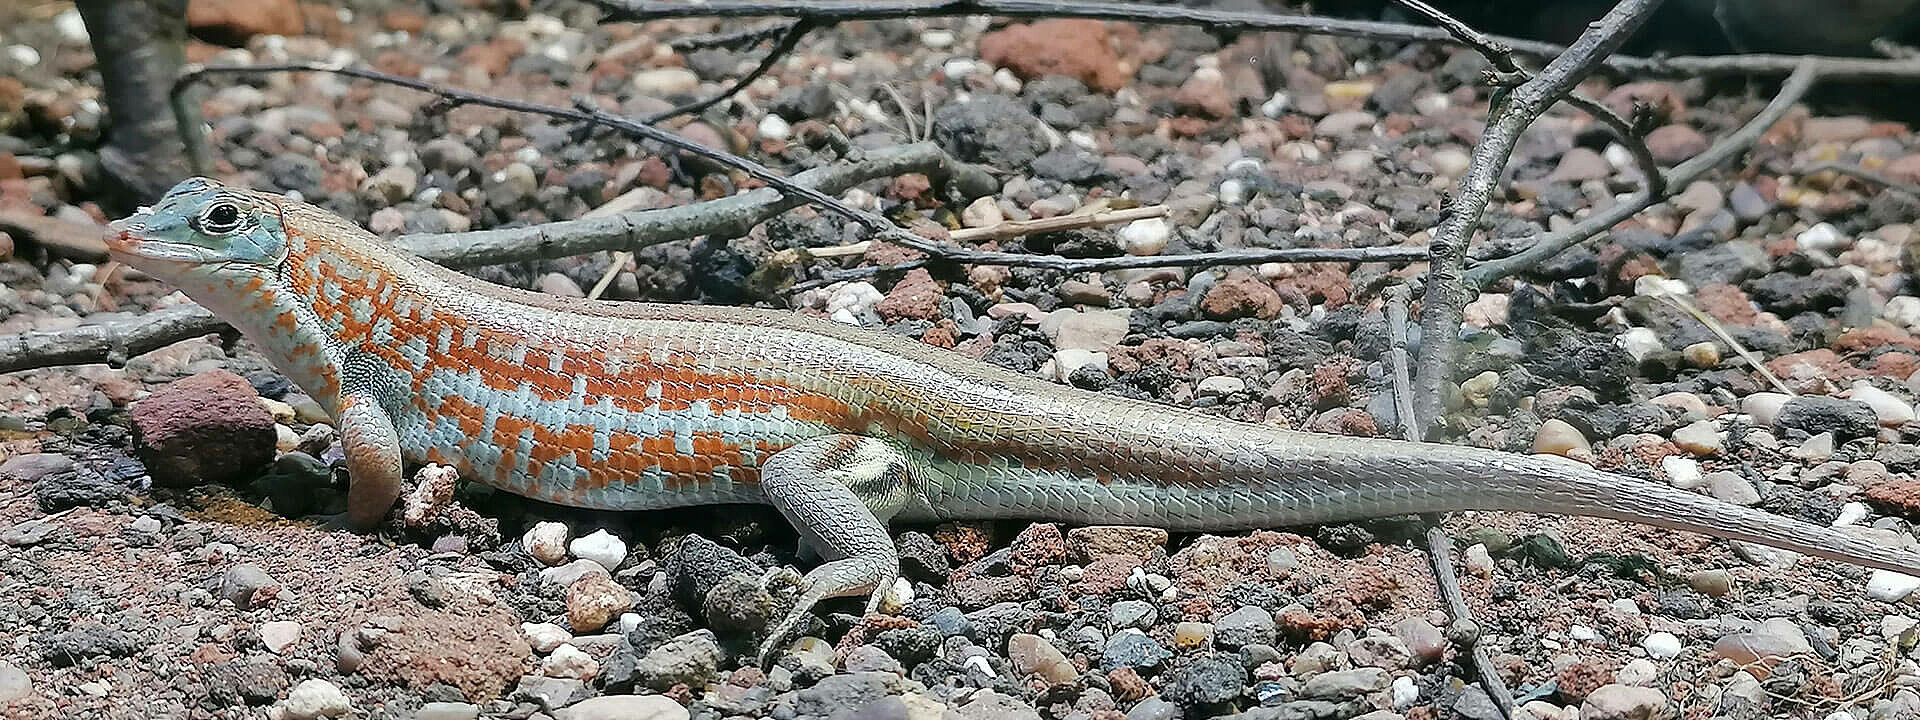 Madagascar Plated Lizard